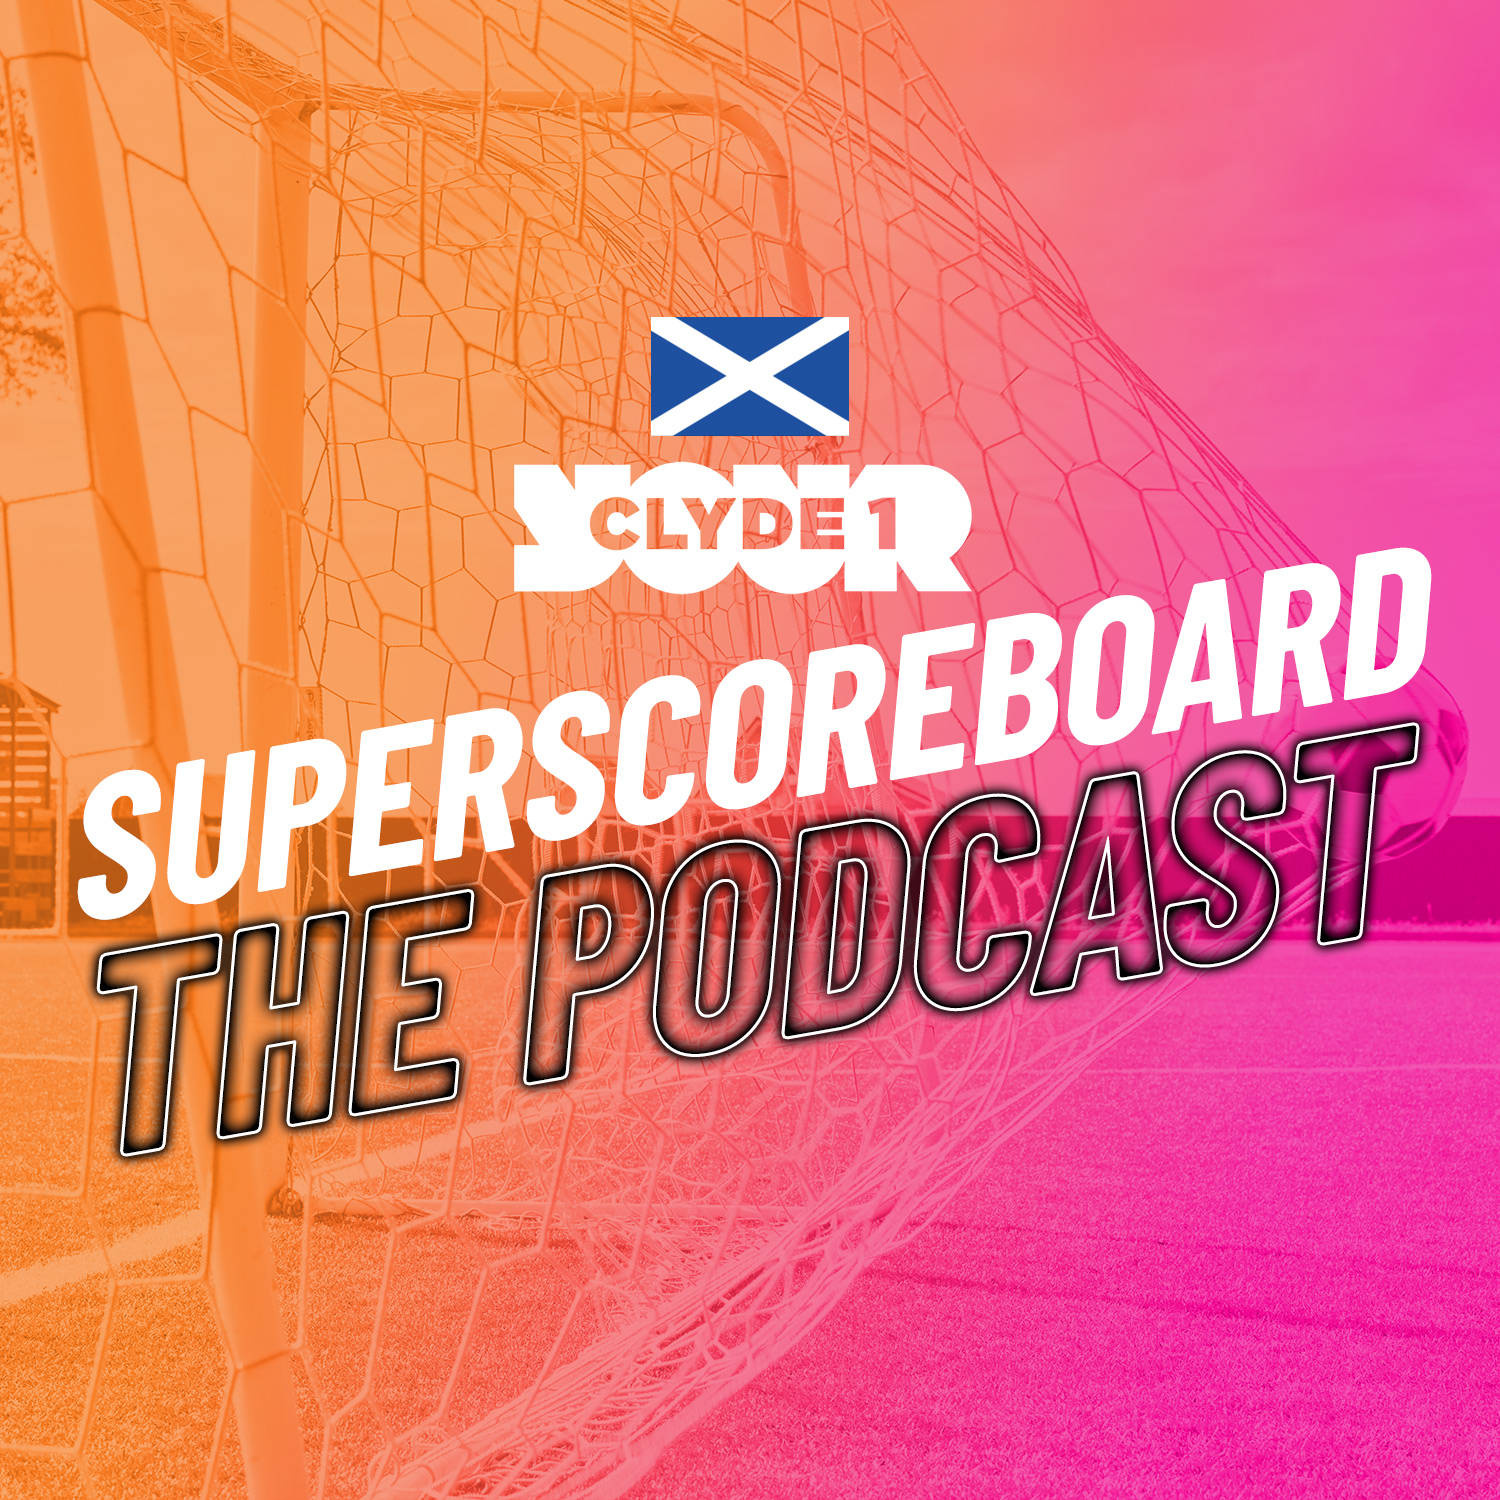 Saturday 6th April Clyde 1 Superscoreboard – Part 2